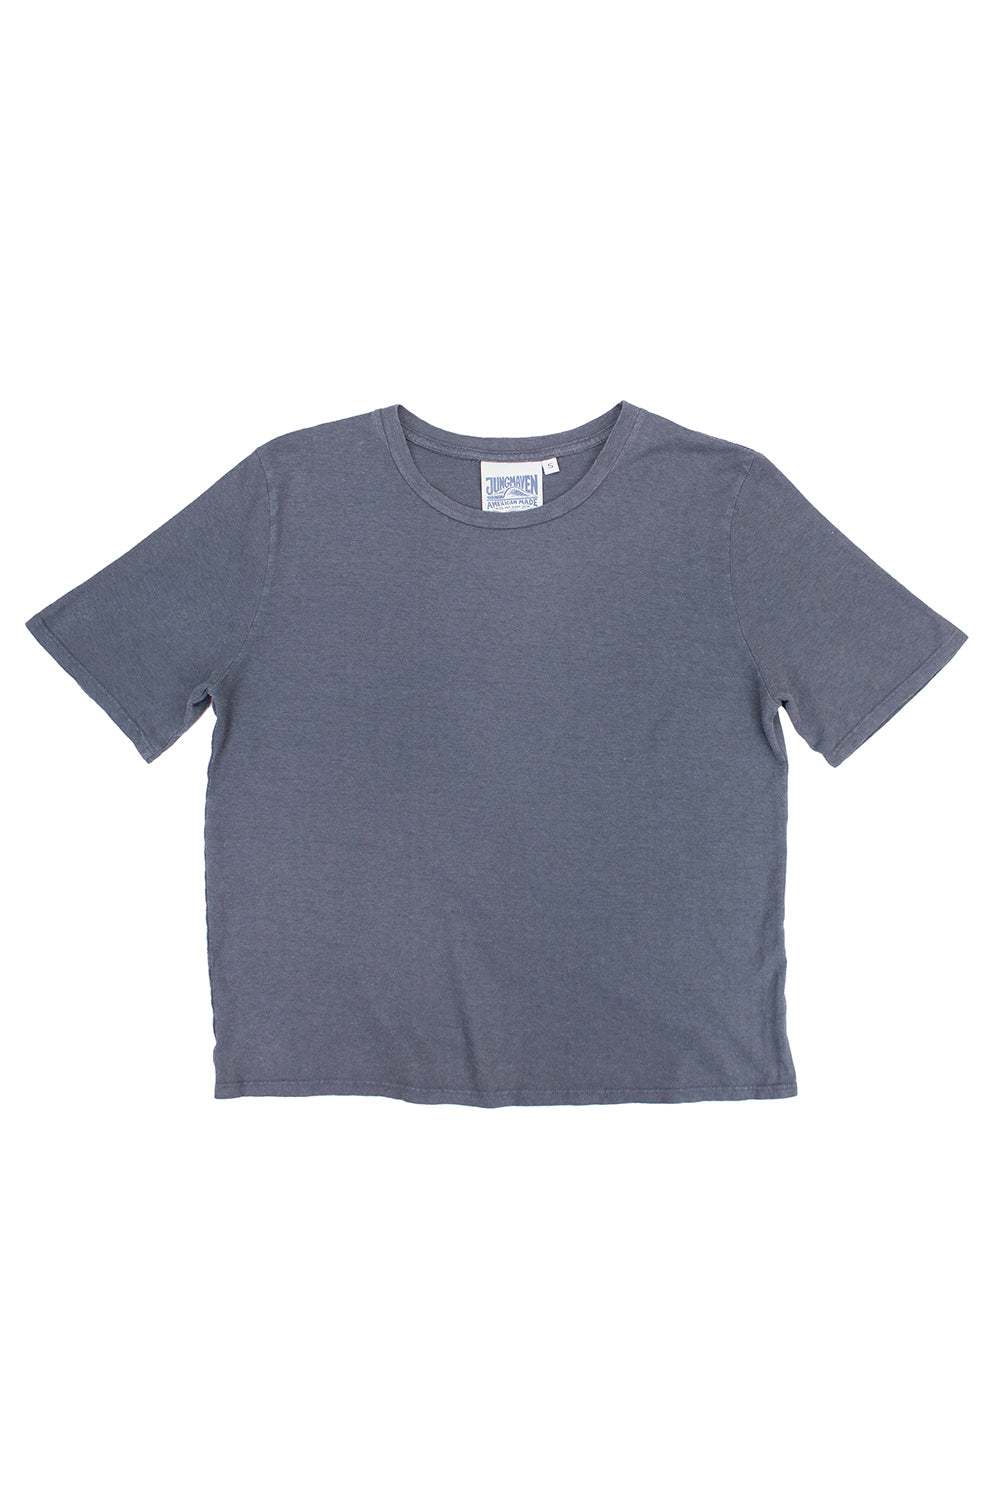 Silverlake Cropped Tee | Jungmaven Hemp Clothing & Accessories / Color: Diesel Gray